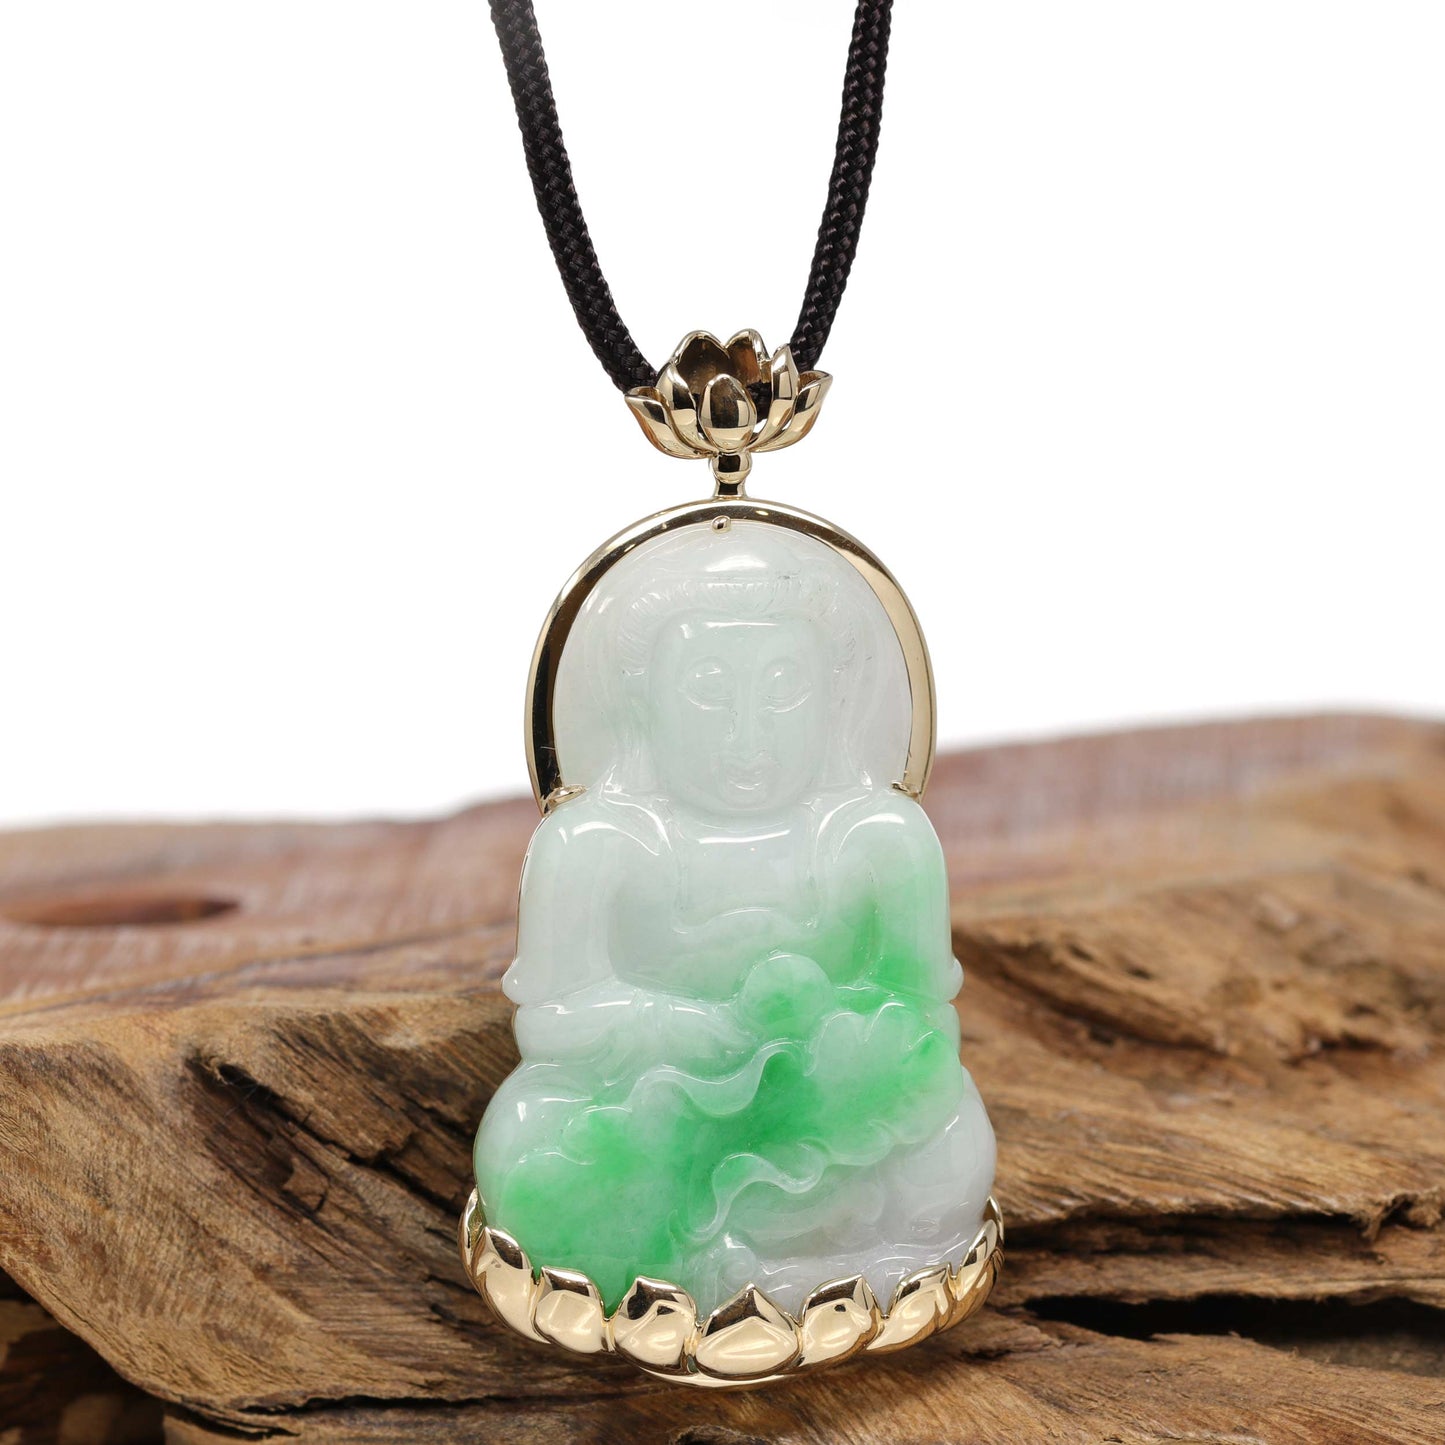 RealJade-jewelry-Guan-Yin-Necklace-natural-Jadeite-Jade-Jewelry-Happy-Valley-Oreog-97086-4